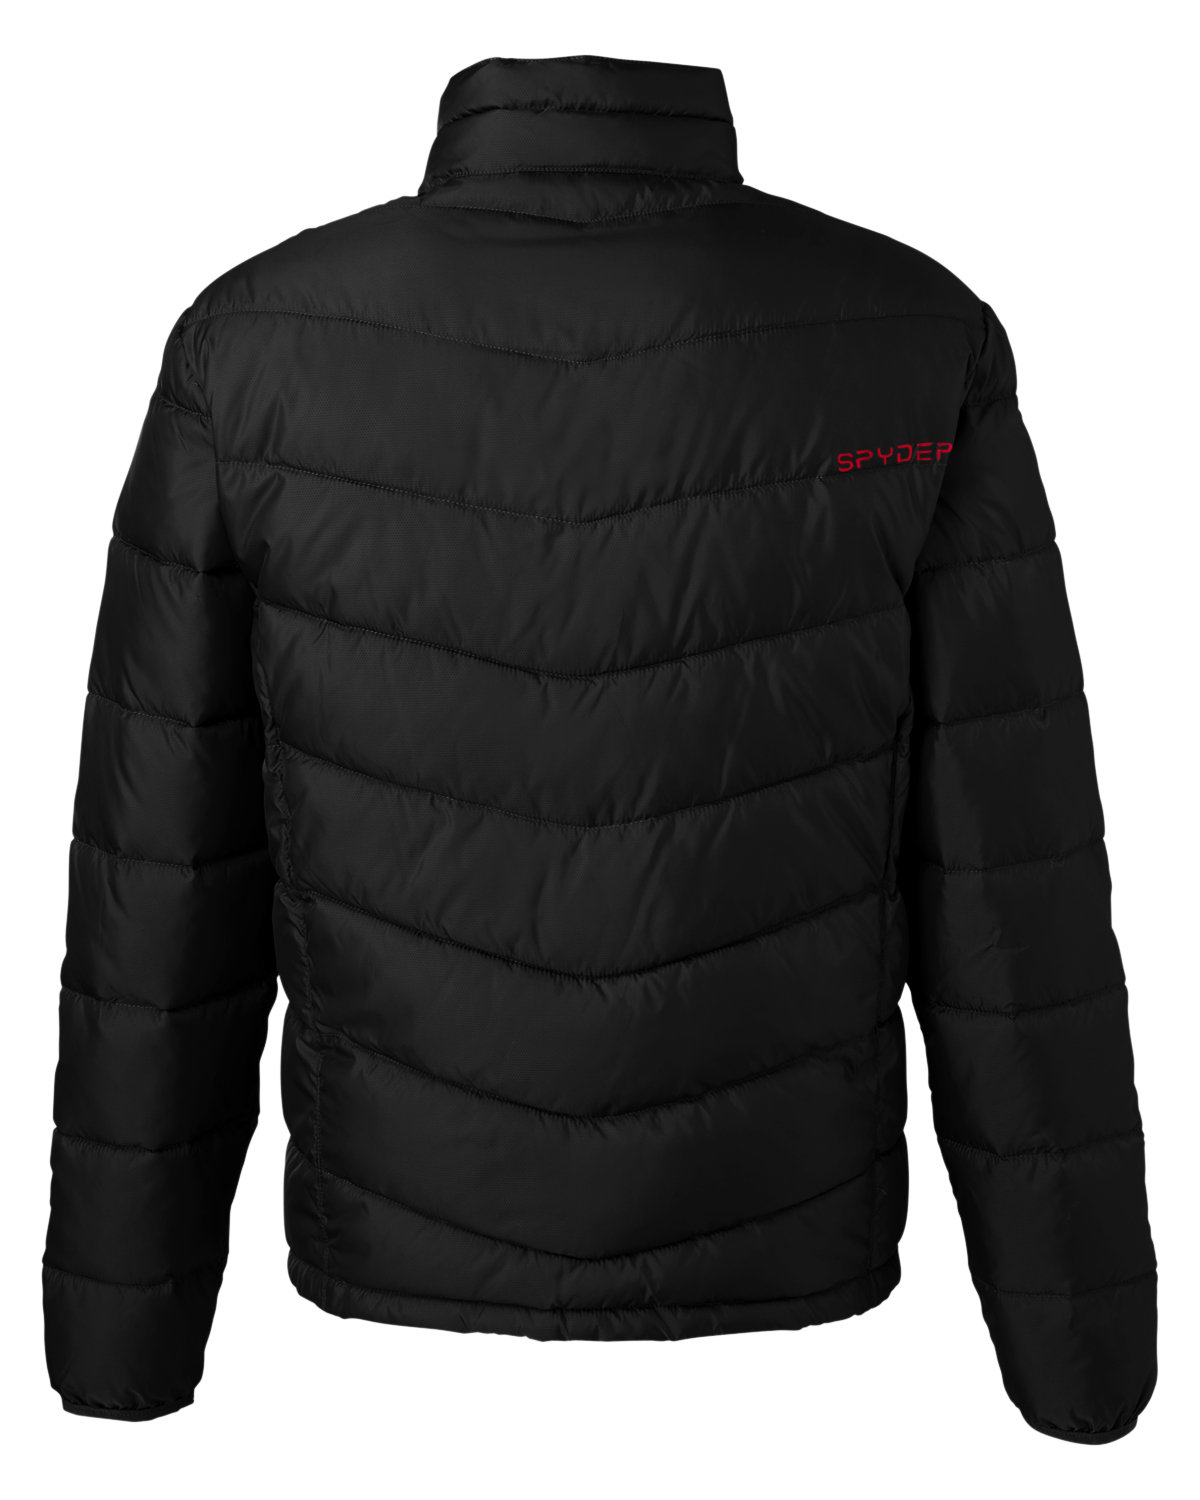 NEW Spyder Pelmo Down Jacket Men's Medium Black/Red Insulated Puffer MSRP $229